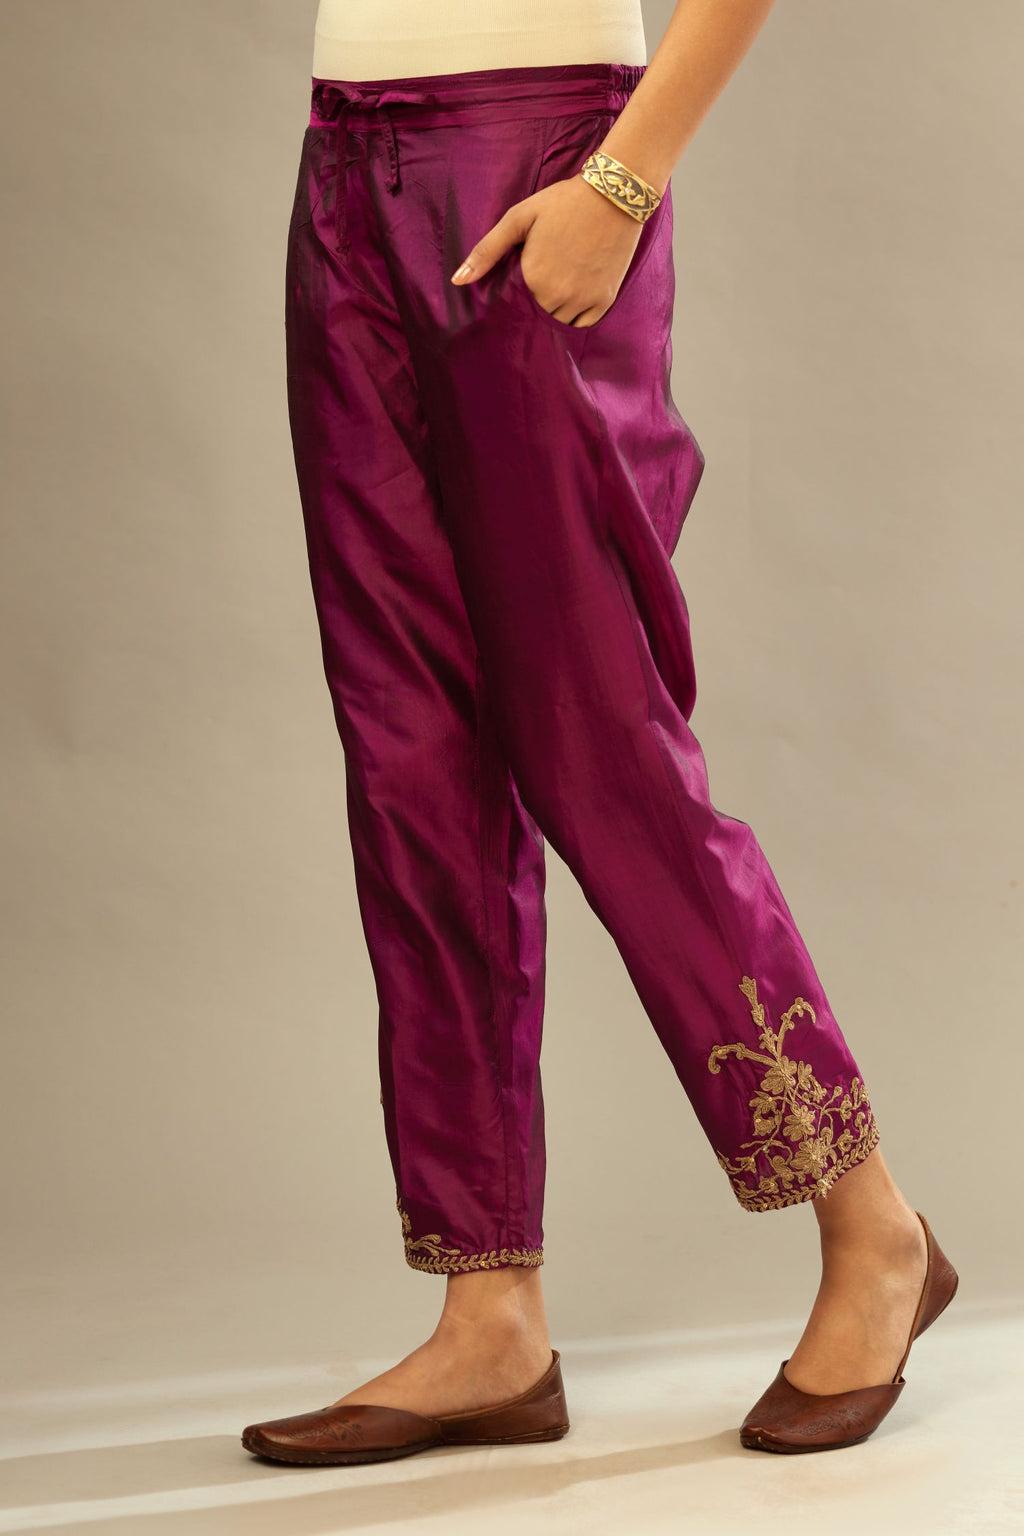 Sangria silk straight pants with dori embroidered bootas at hem.